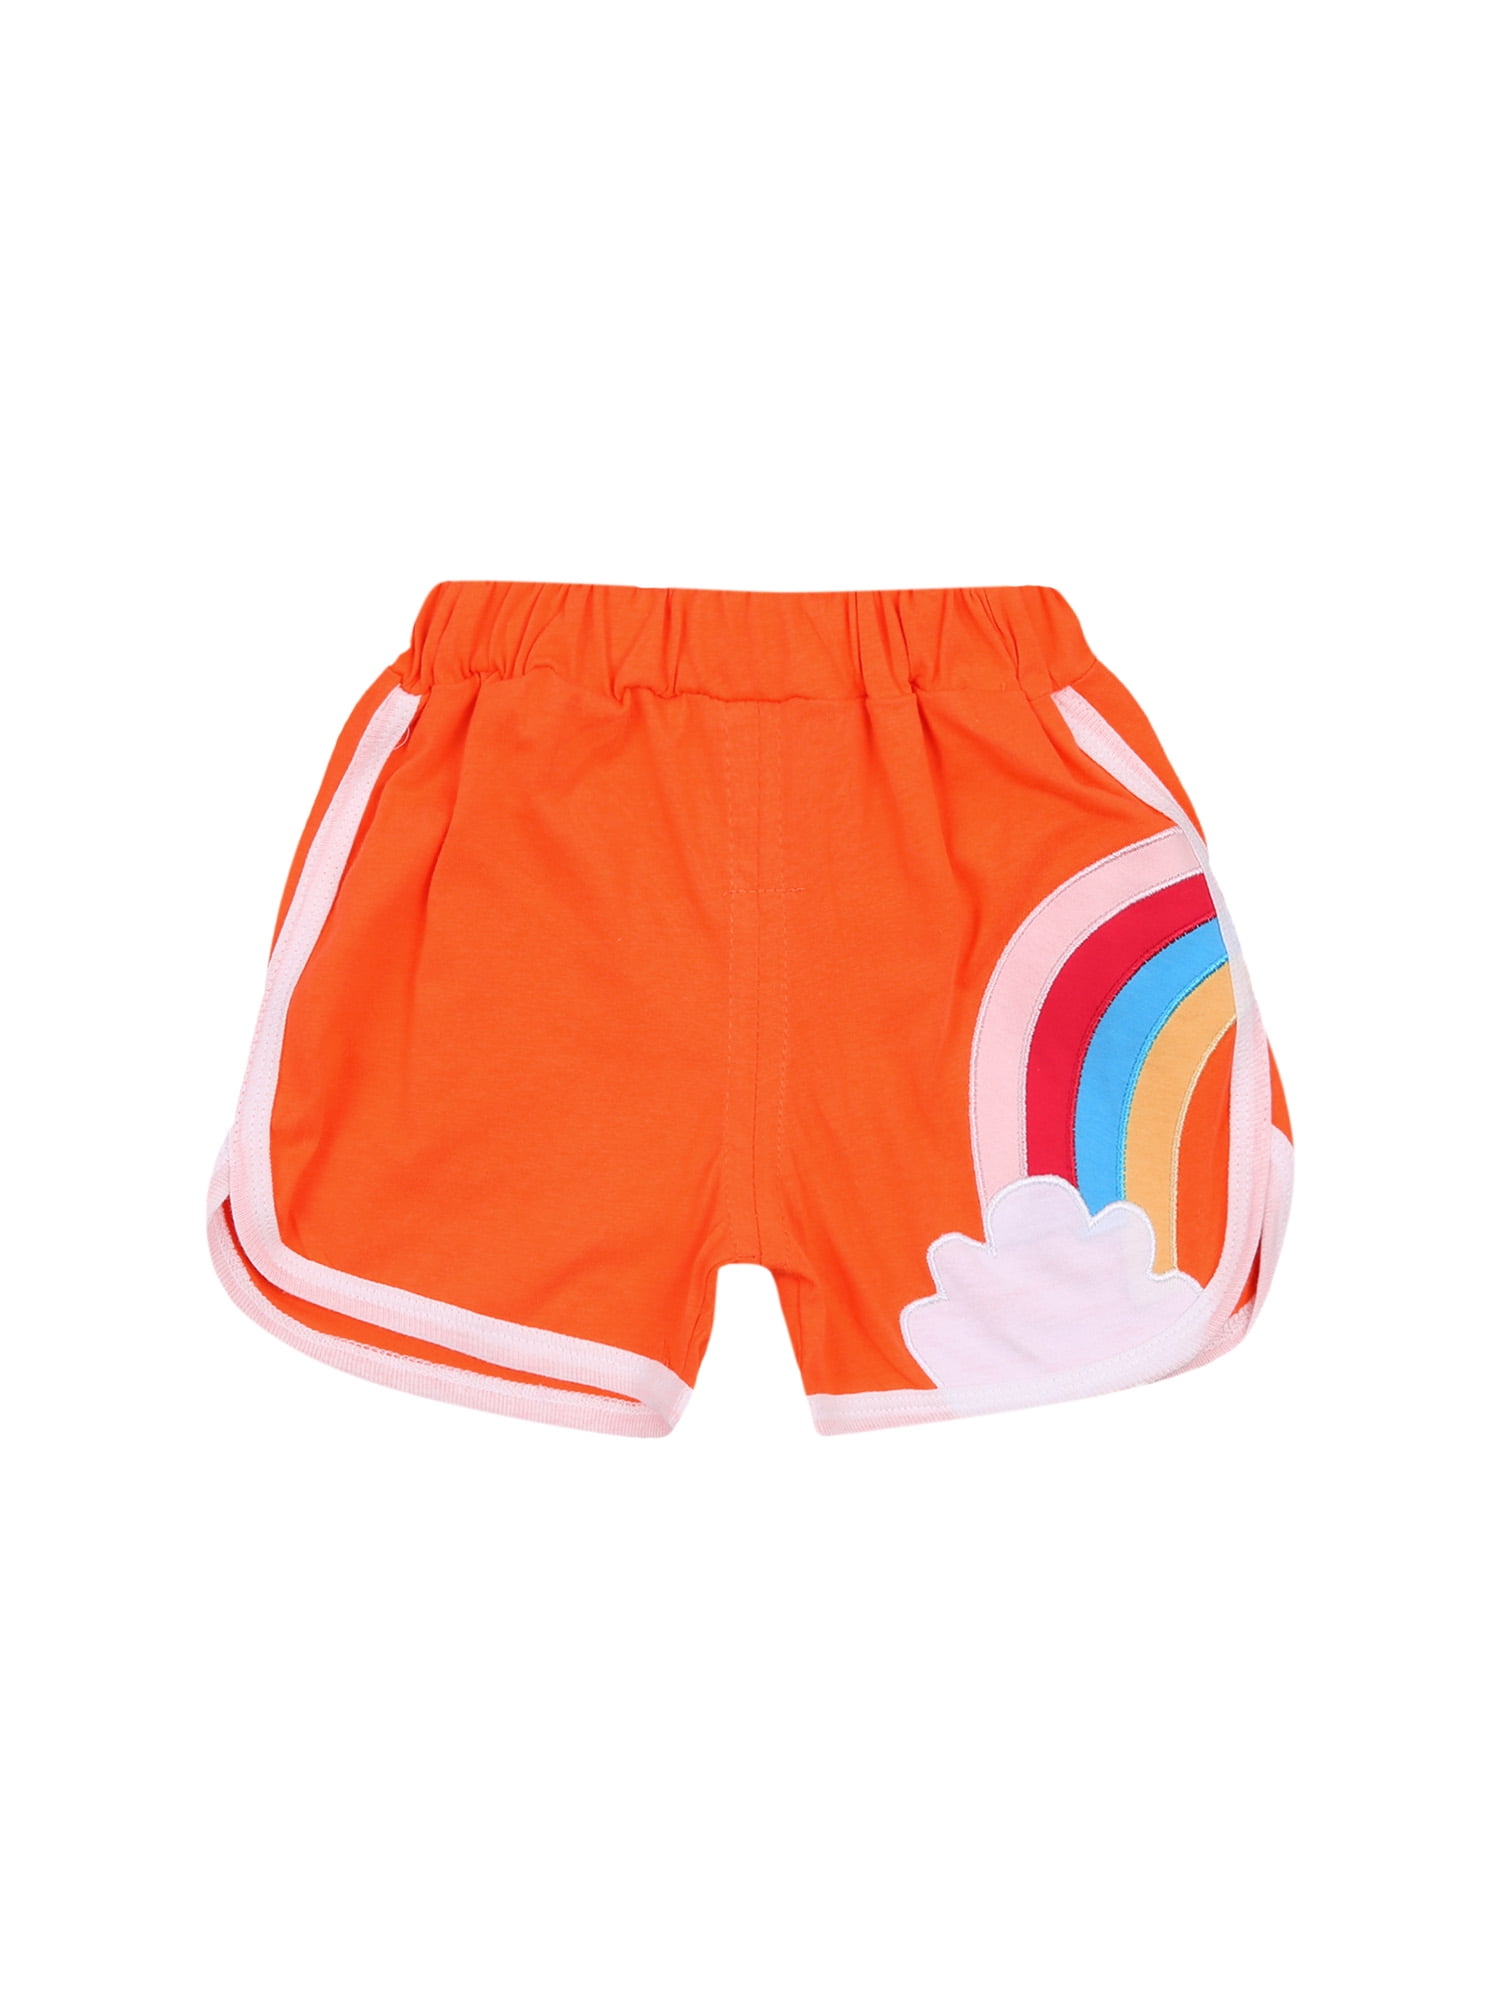 Toddler Baby Boy Girl Active Shorts Sport Running Wear Rainbow Printing High Waist Elastic Short Pants Outfit 